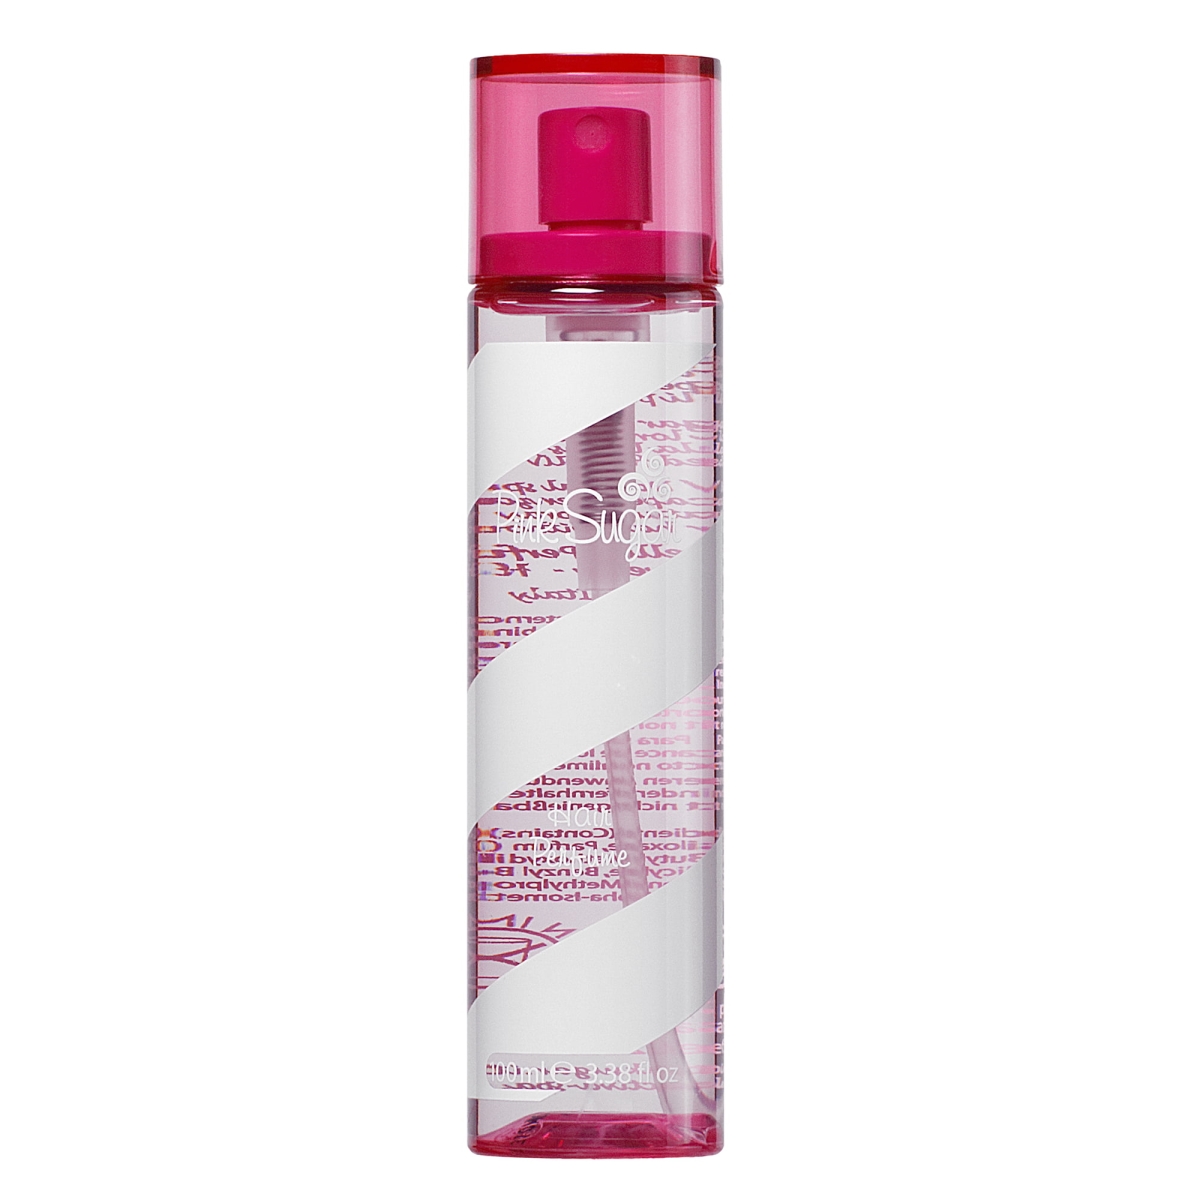 Picture of Aquolina 15023743 3.4 oz Pink Sugar Hair Perfume